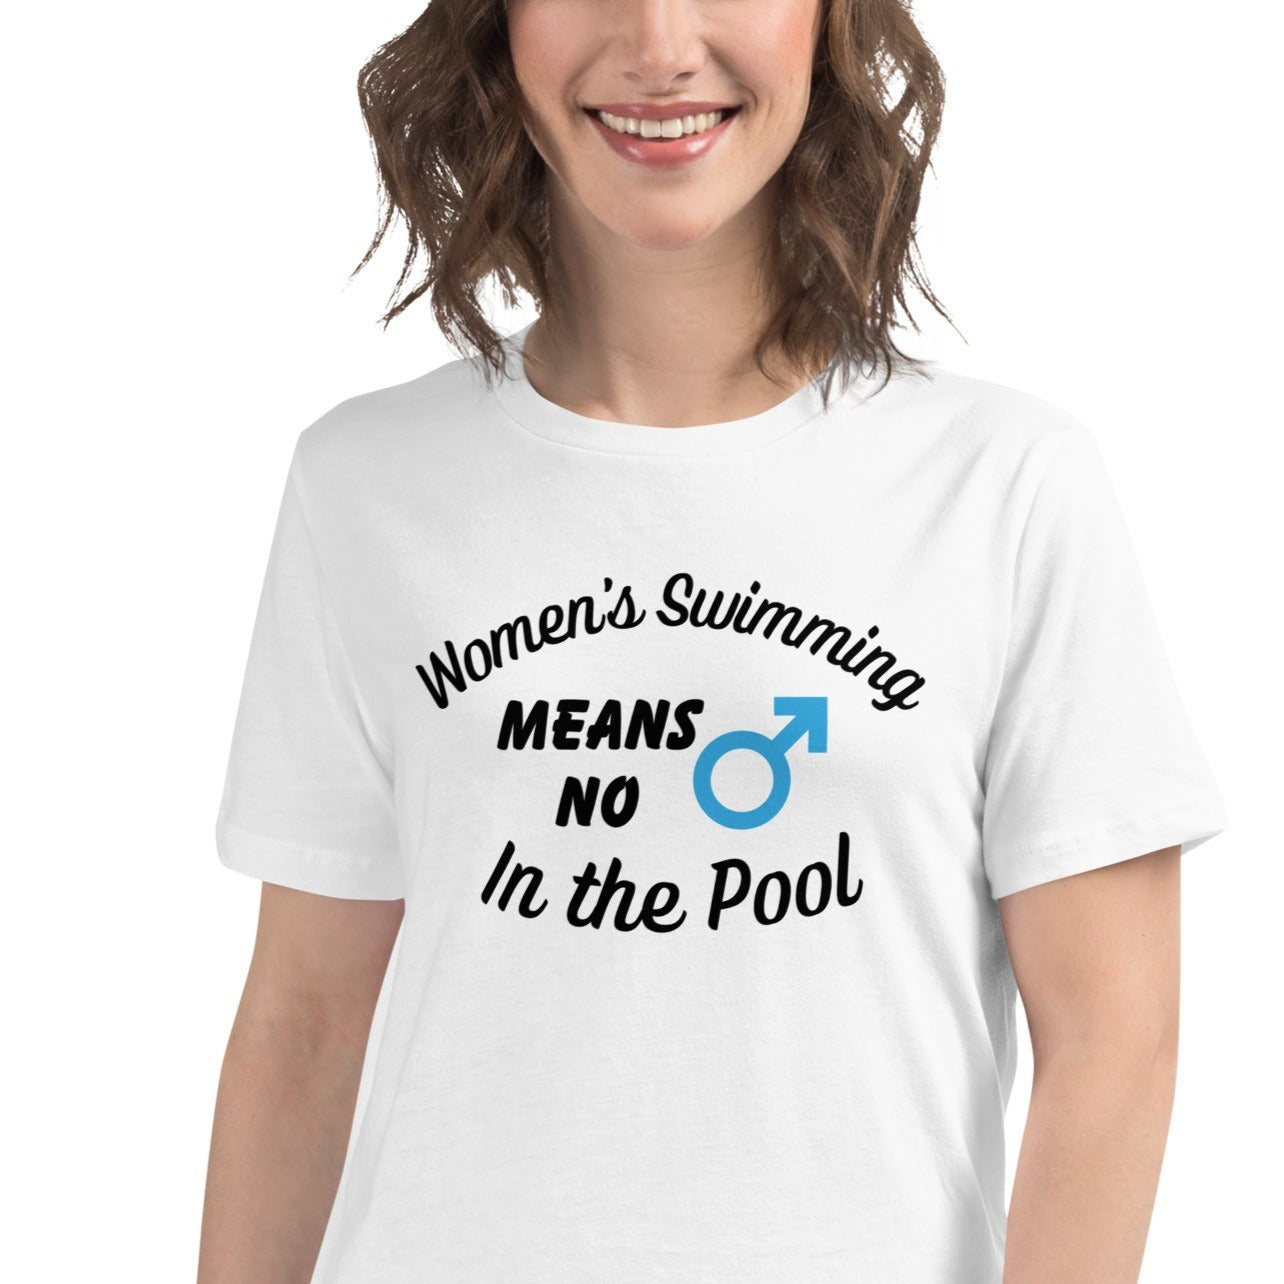 Protect Women's Swimming T-Shirt